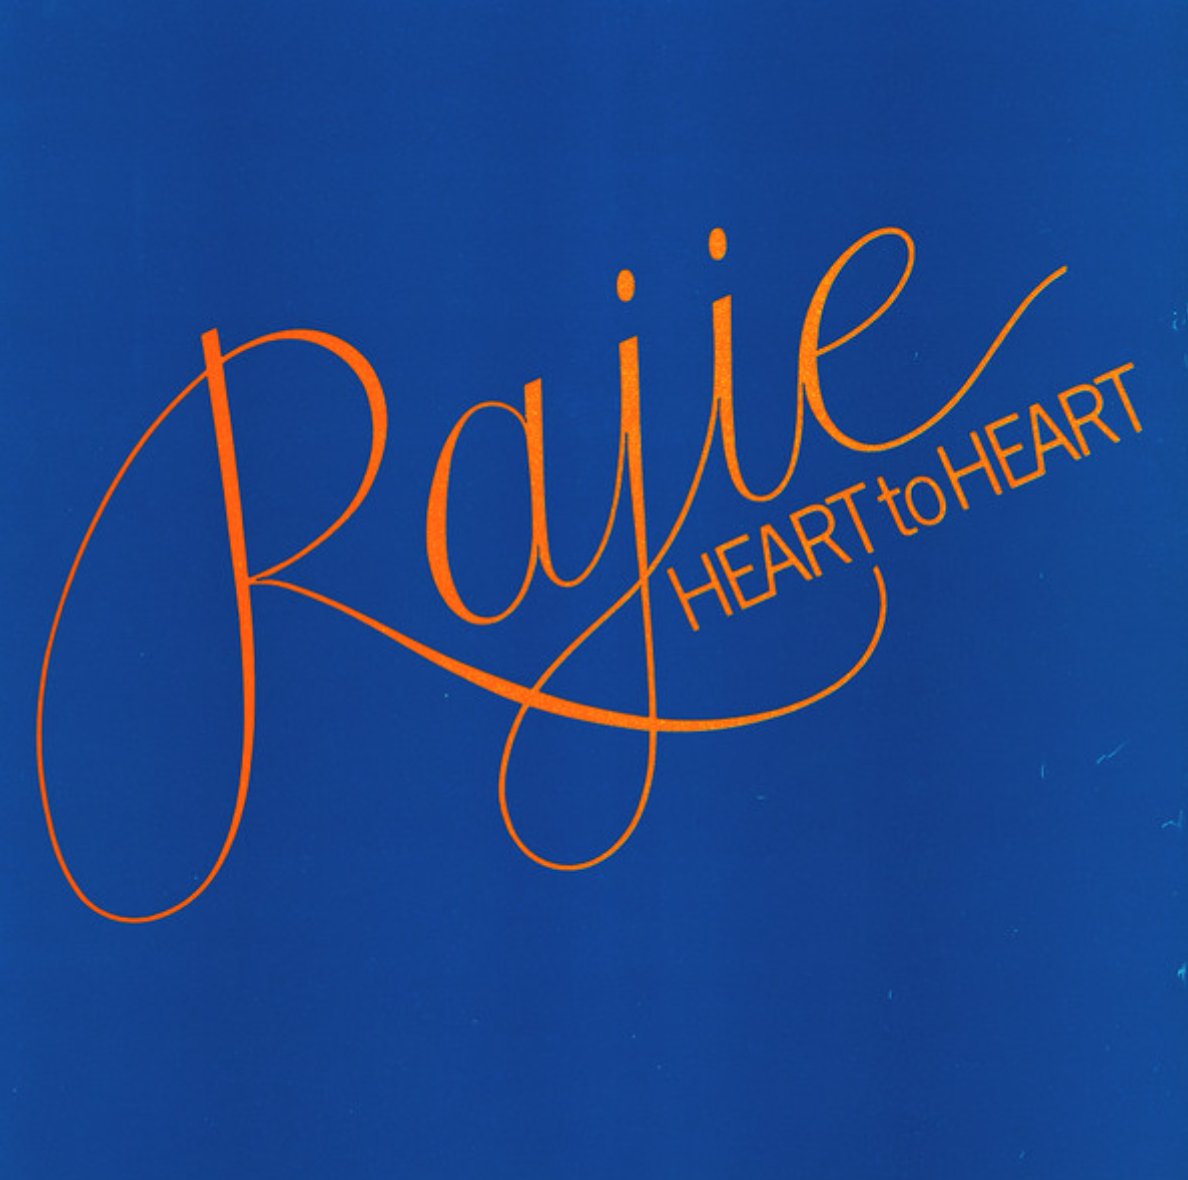 Rajie - Heart To Heart (Japan Import) - Inner Ocean Records